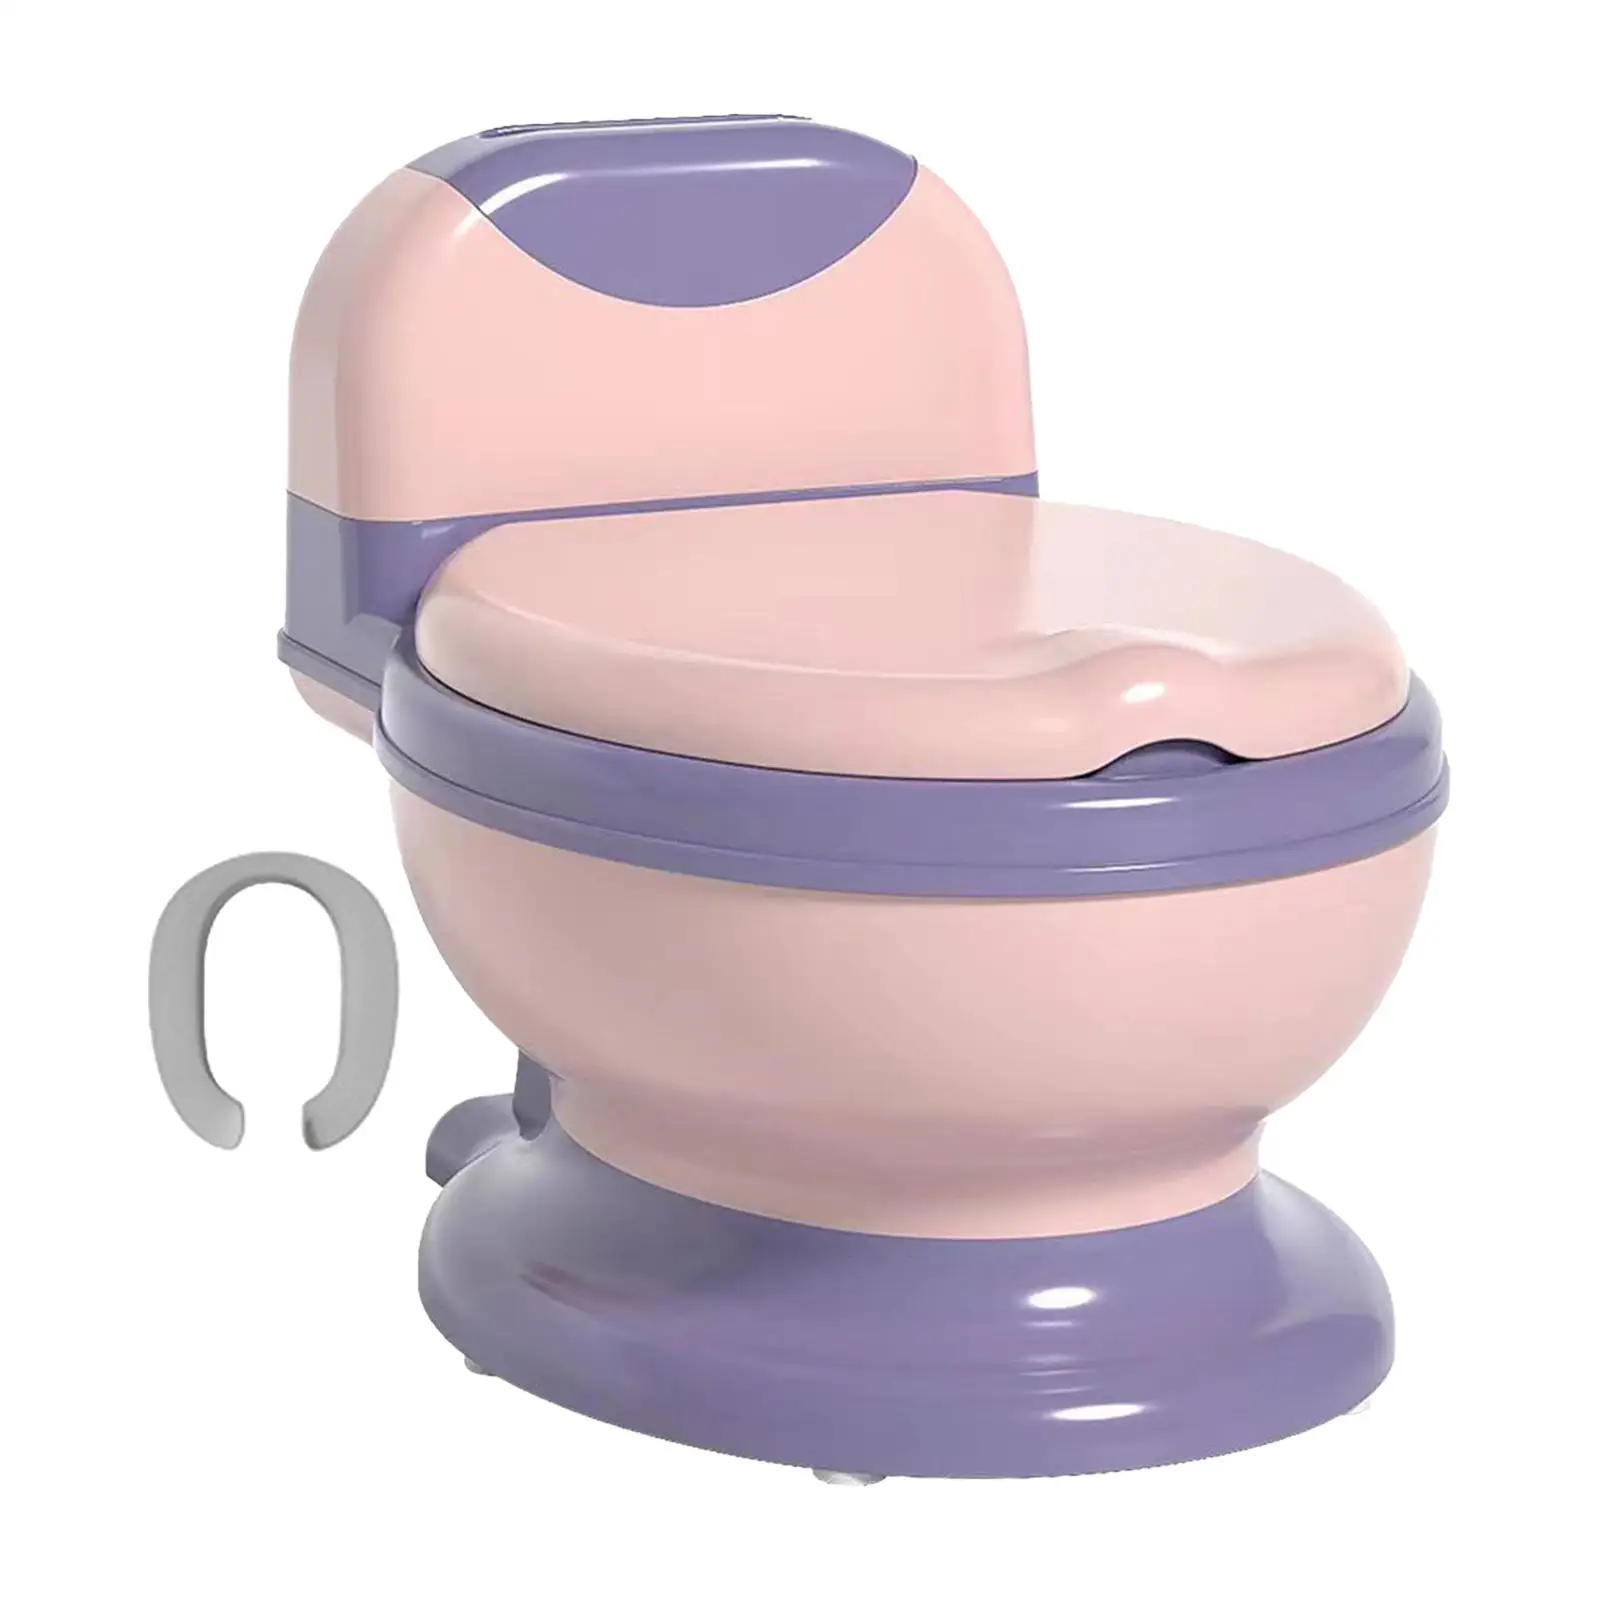 Potty Train Toilet Detachable Potty Train Seat Comfortable Portable Realistic Toilet for Baby Children Toddlers Boys Kids